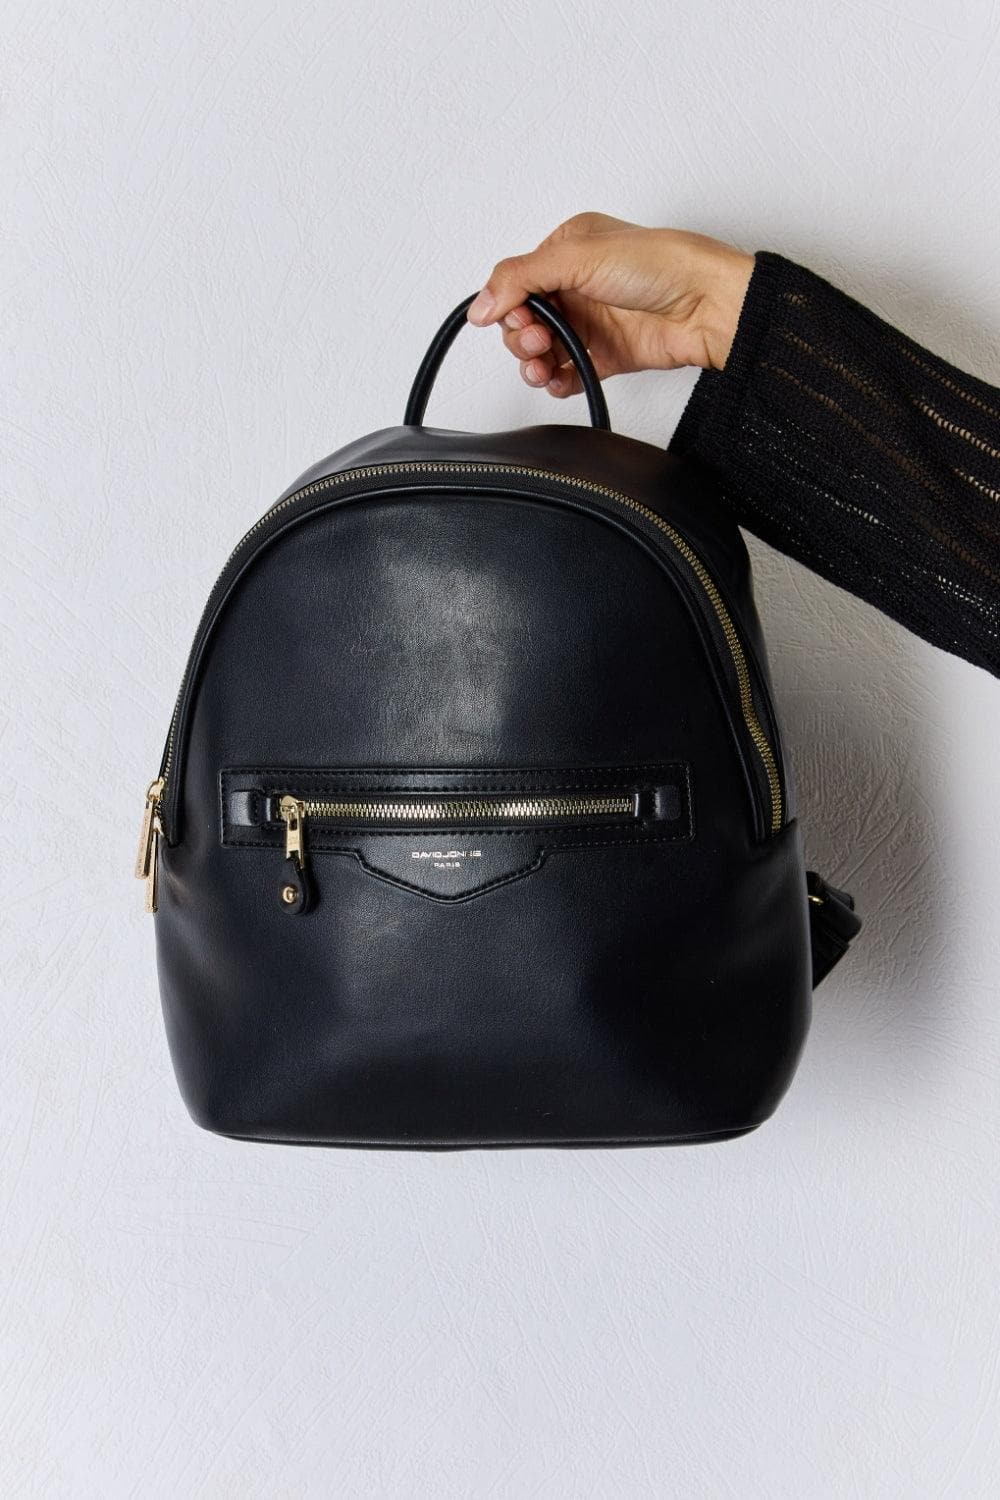 David Jones PU Leather Backpack - SwagglyLife Home & Fashion